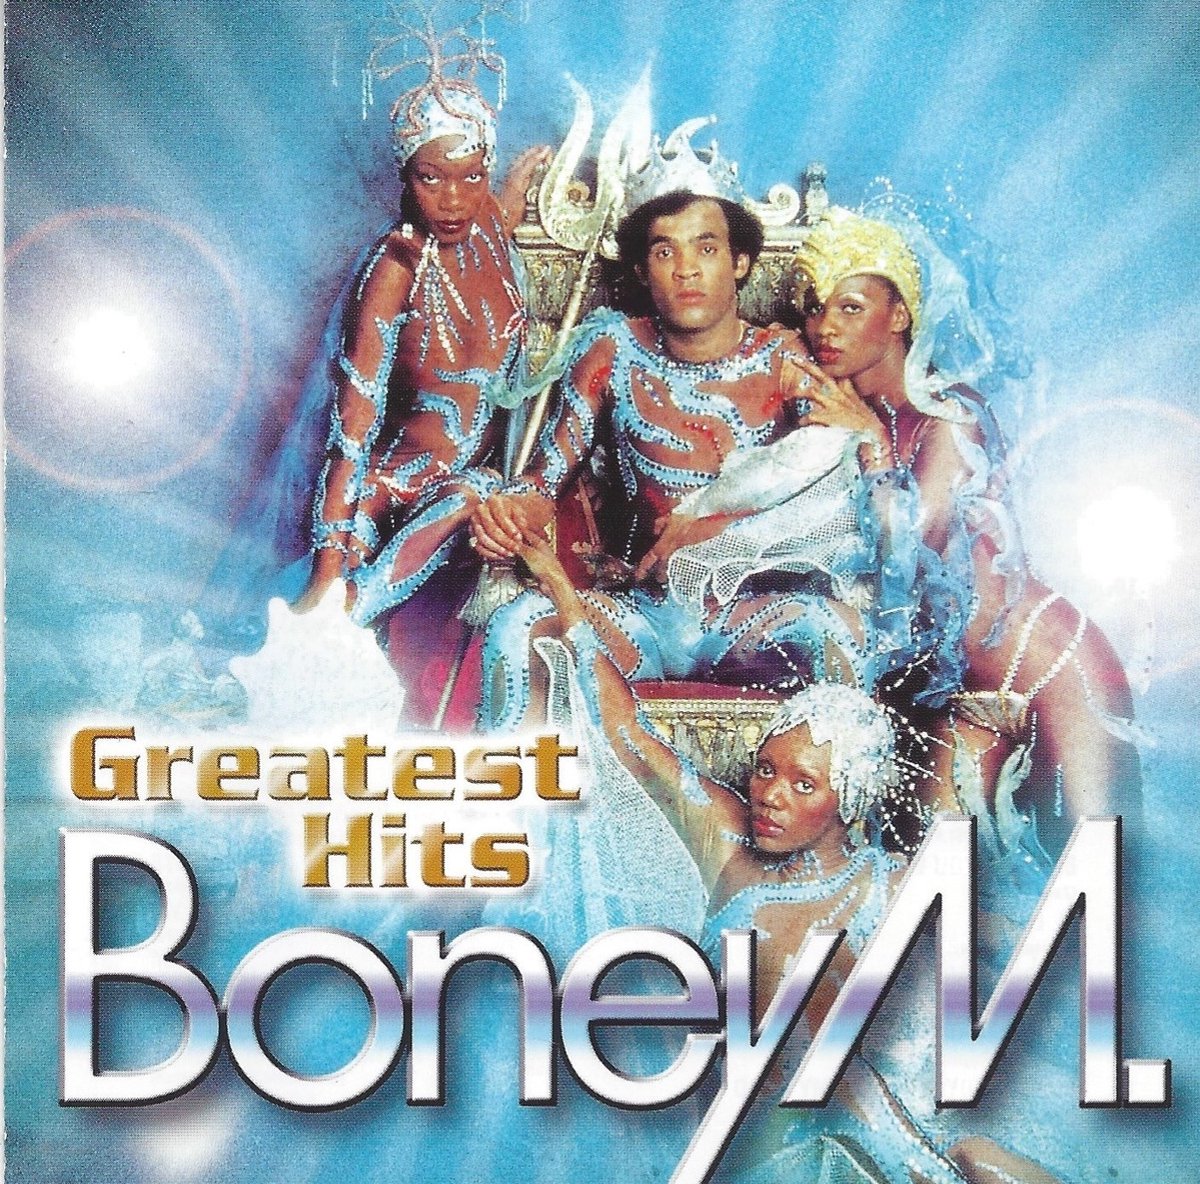 Love for sale boney. Boney m обложки дисков. Бони м обложки дисков. Boney m обложка. Boney m CD обложки.